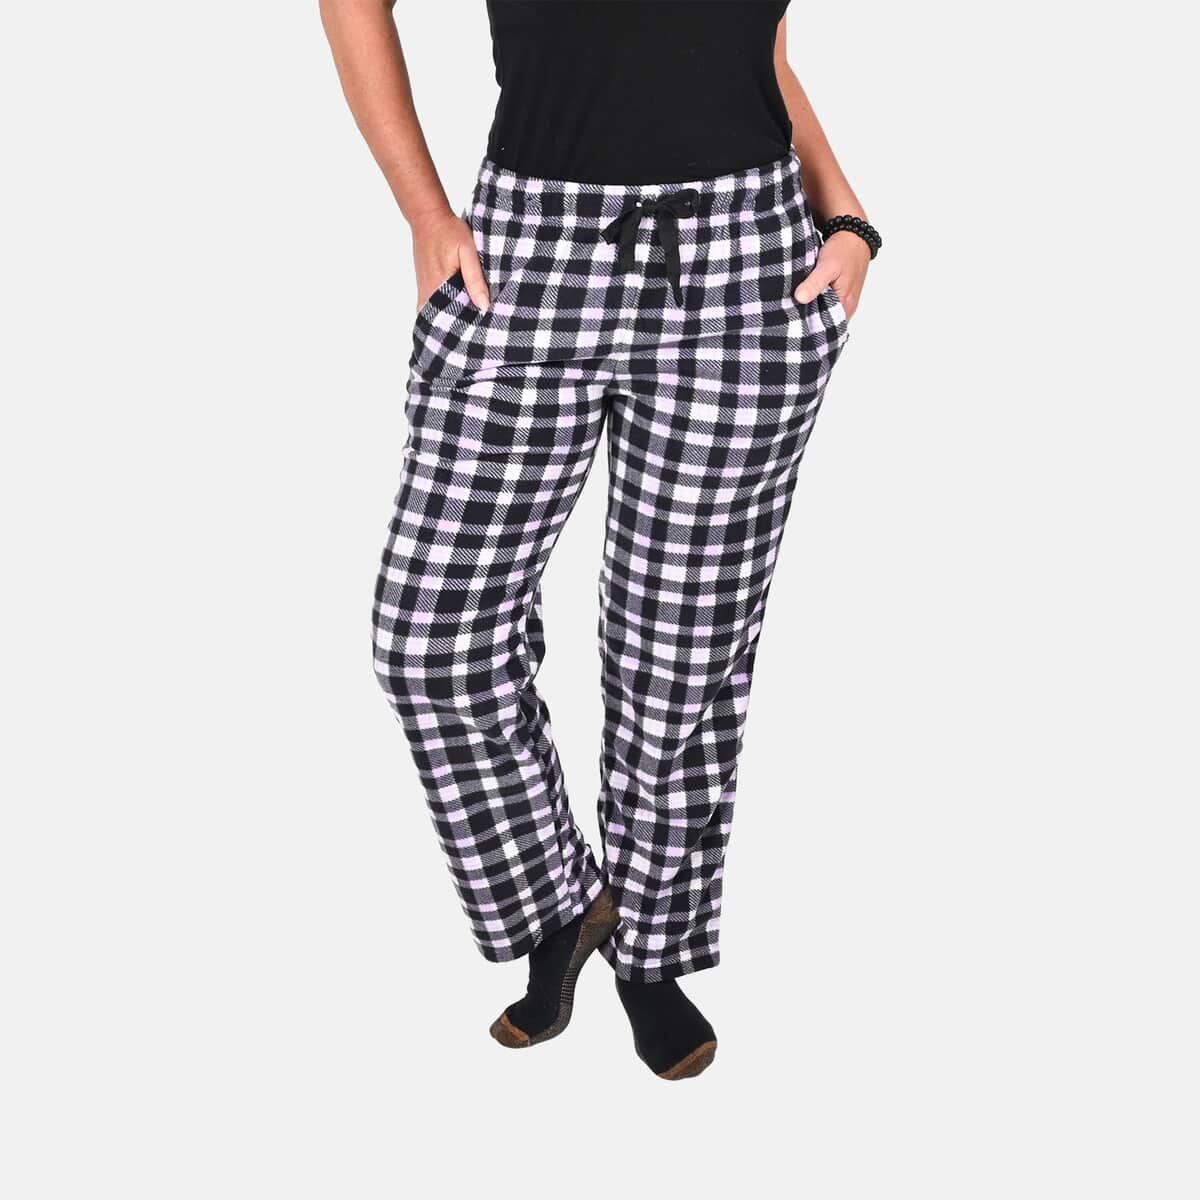 Victory Sportswear Purple and Black Plaid Pattern Microfleece Lounge Pants - M image number 3